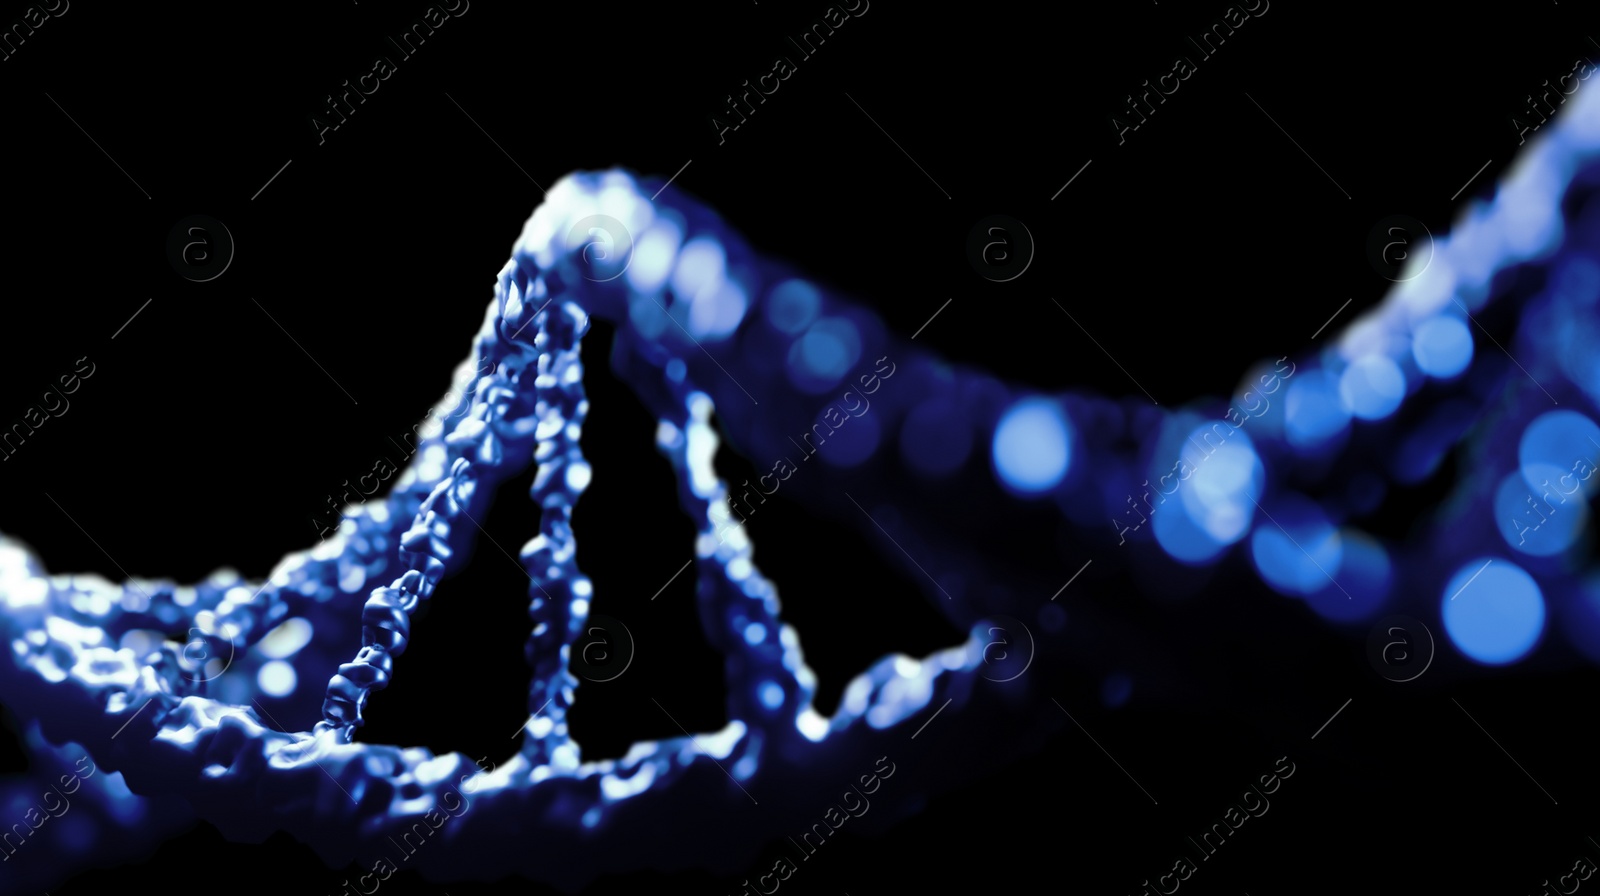 Illustration of Structure of DNA on dark background. Illustration